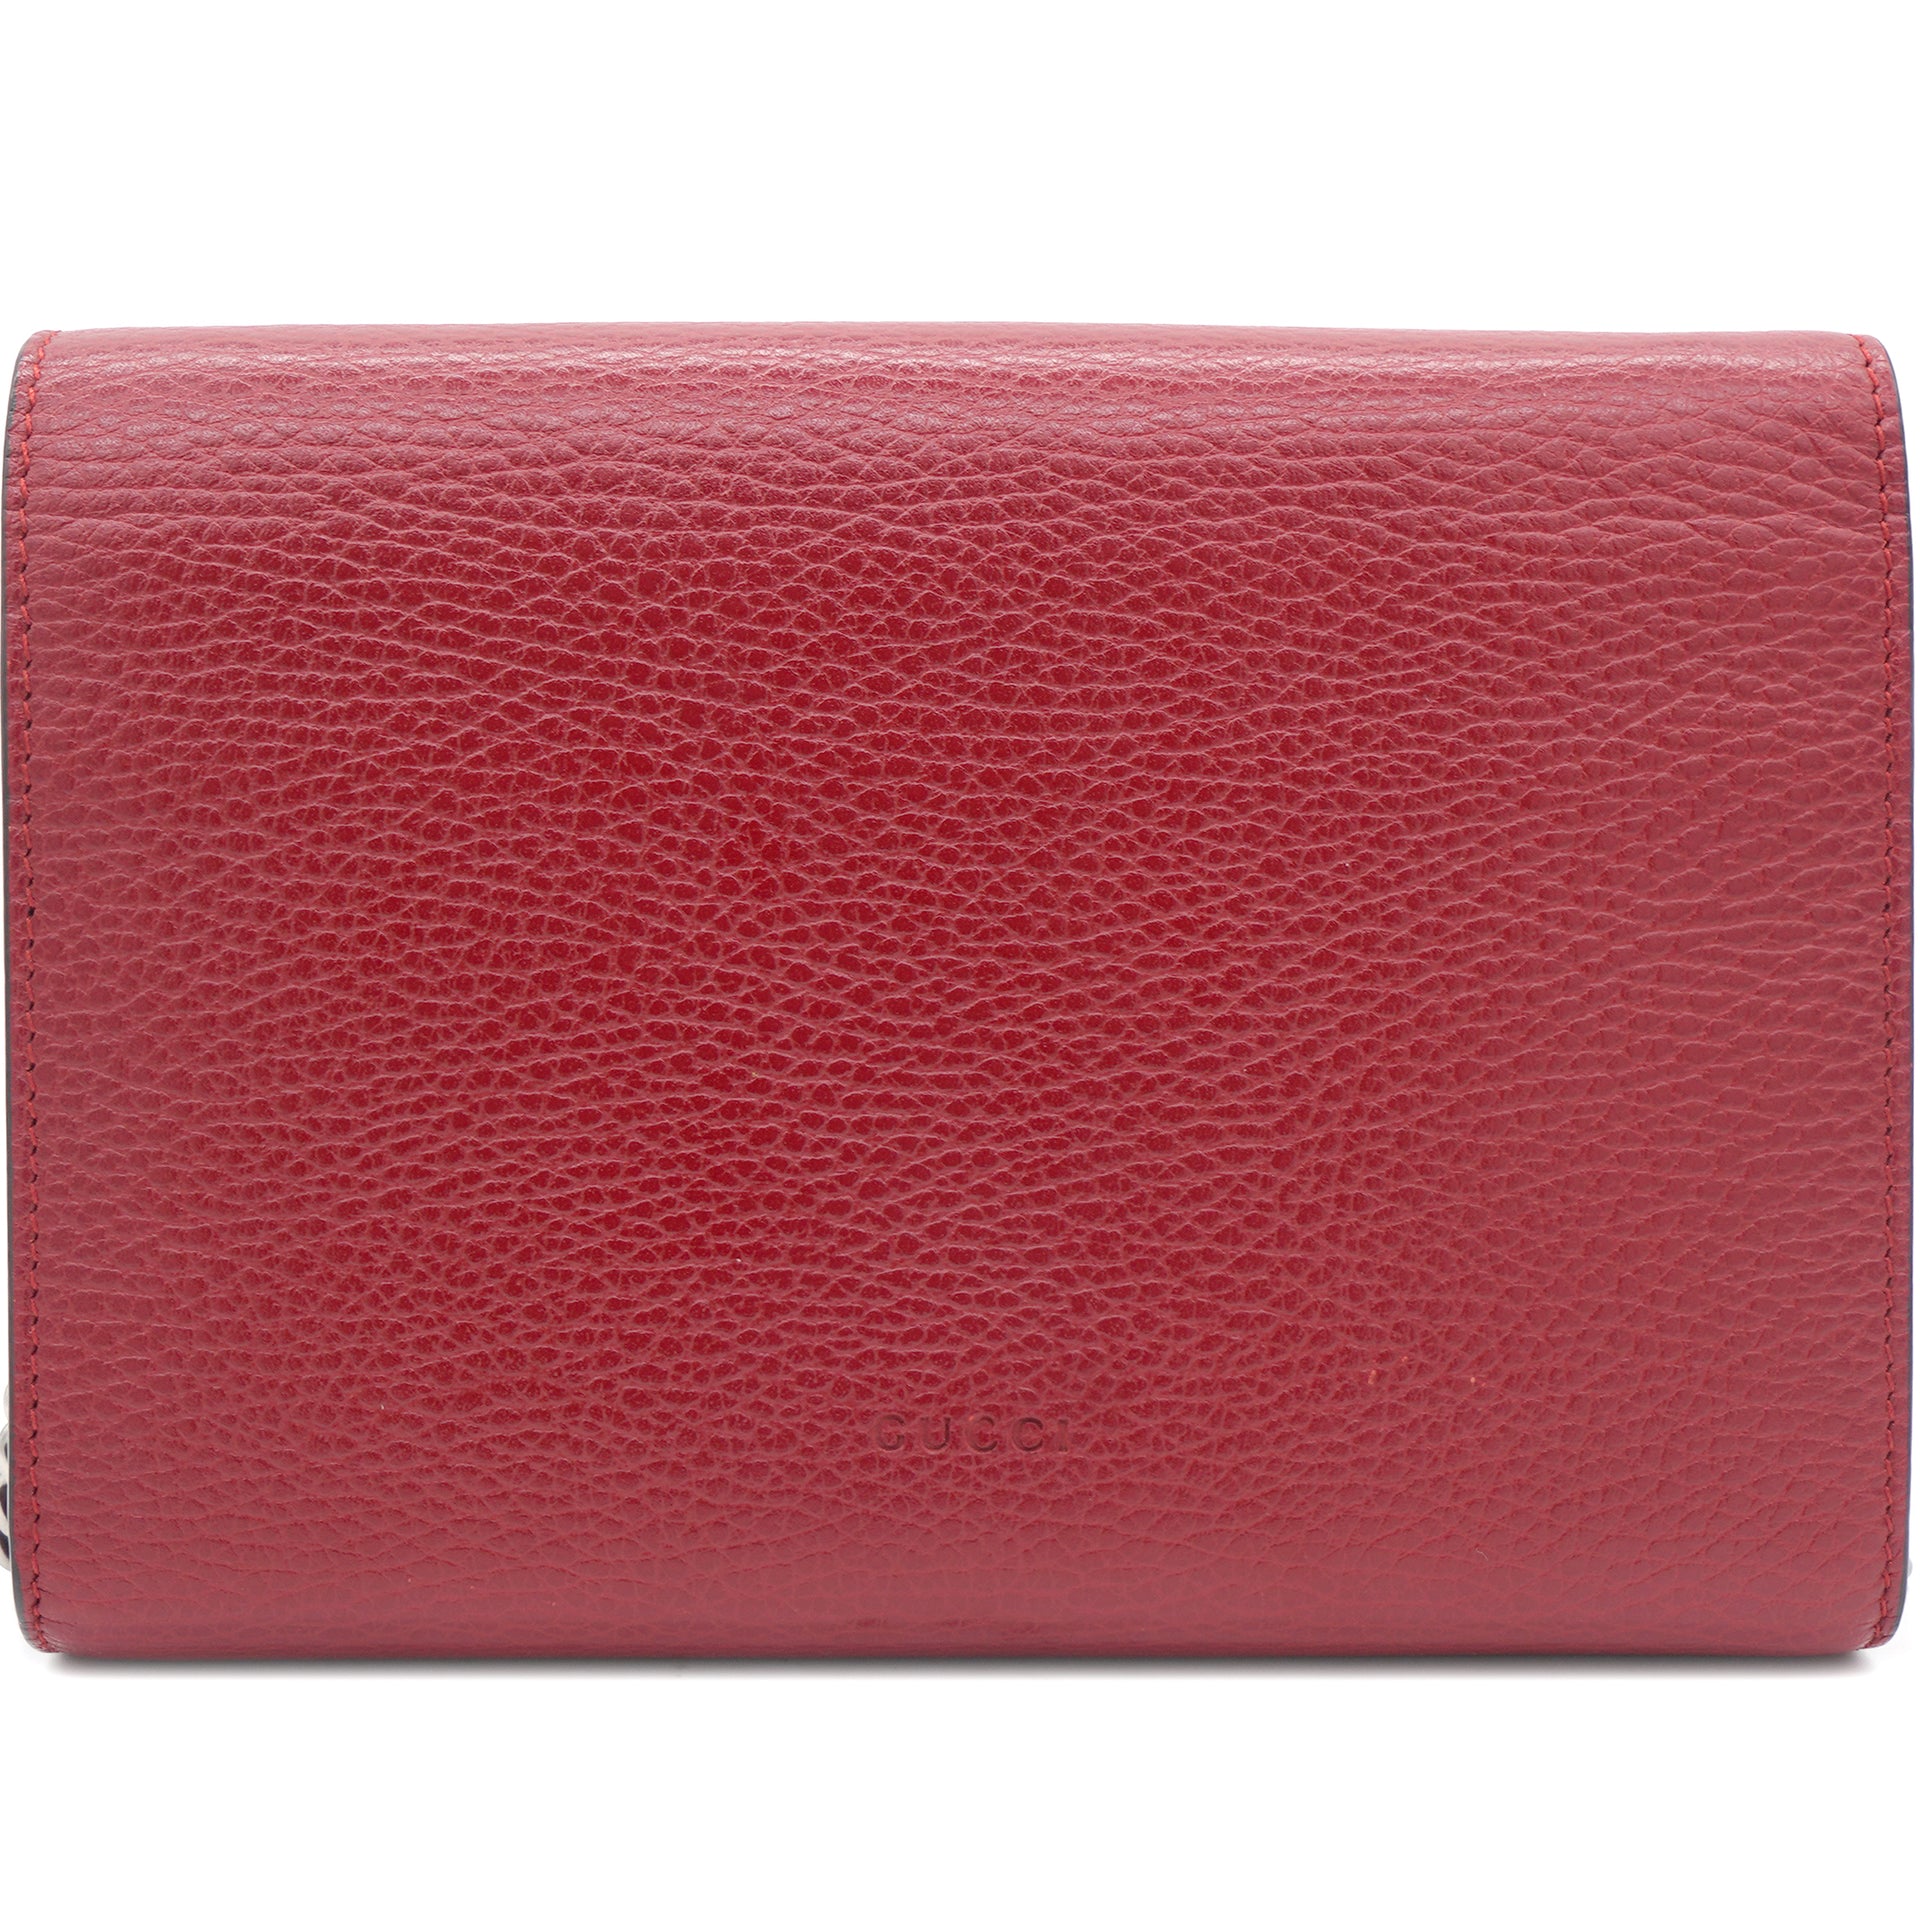 Louis Vuitton - Authenticated Zoé Wallet - Leather Multicolour for Women, Very Good Condition